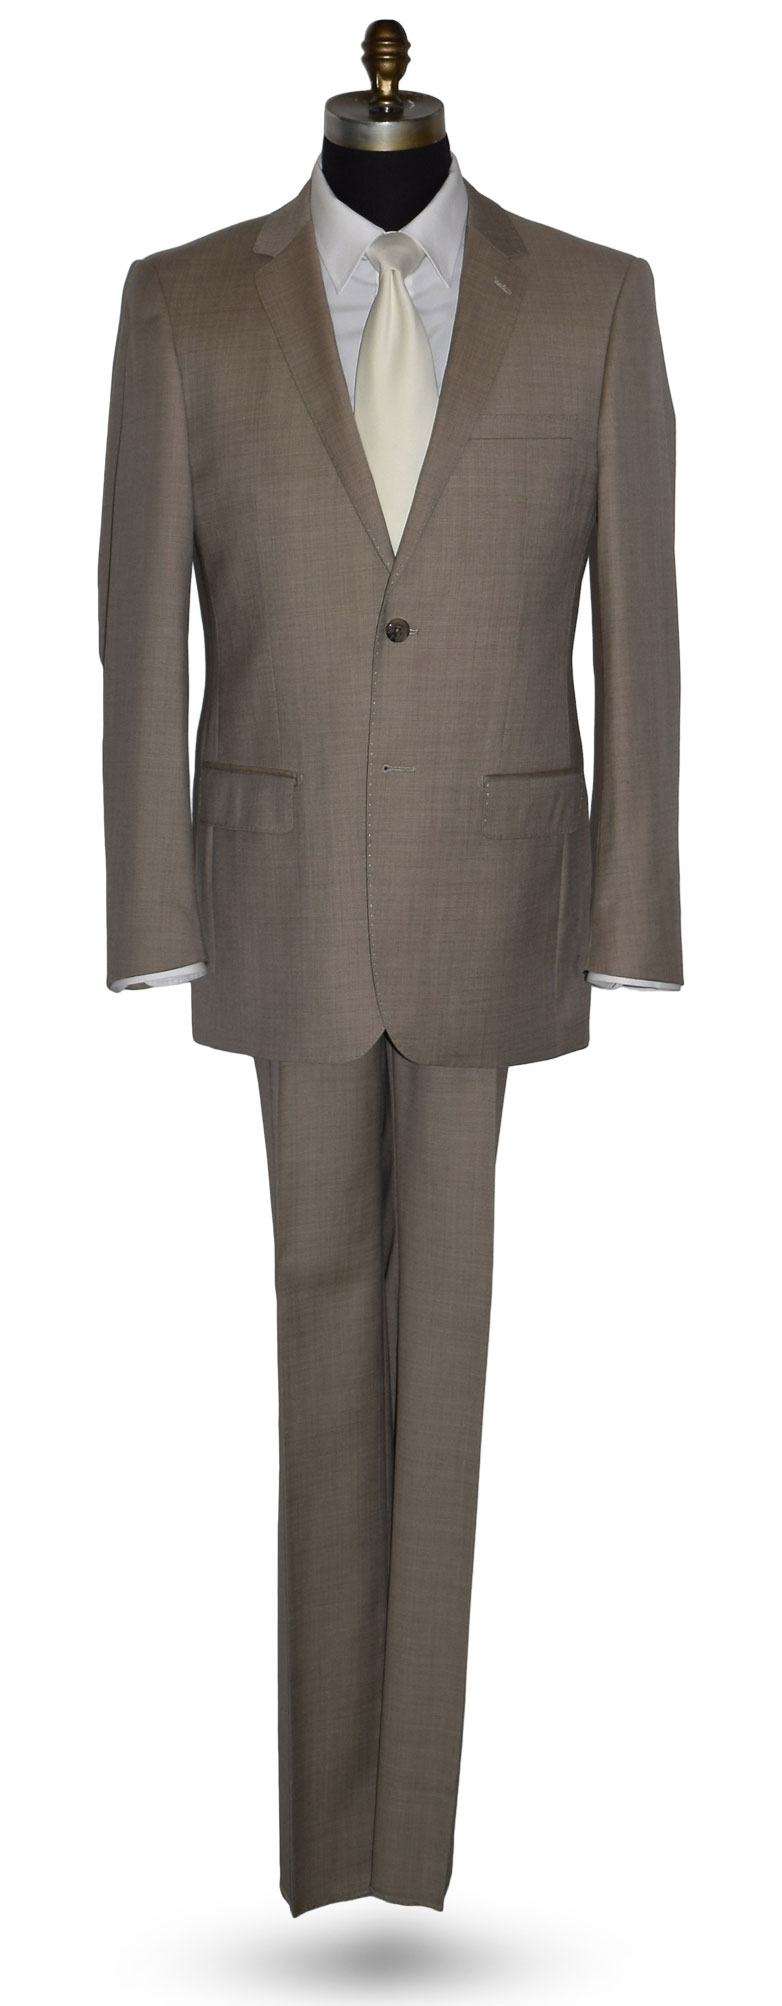 Biscotti Tan Suit Coat and Pants Set